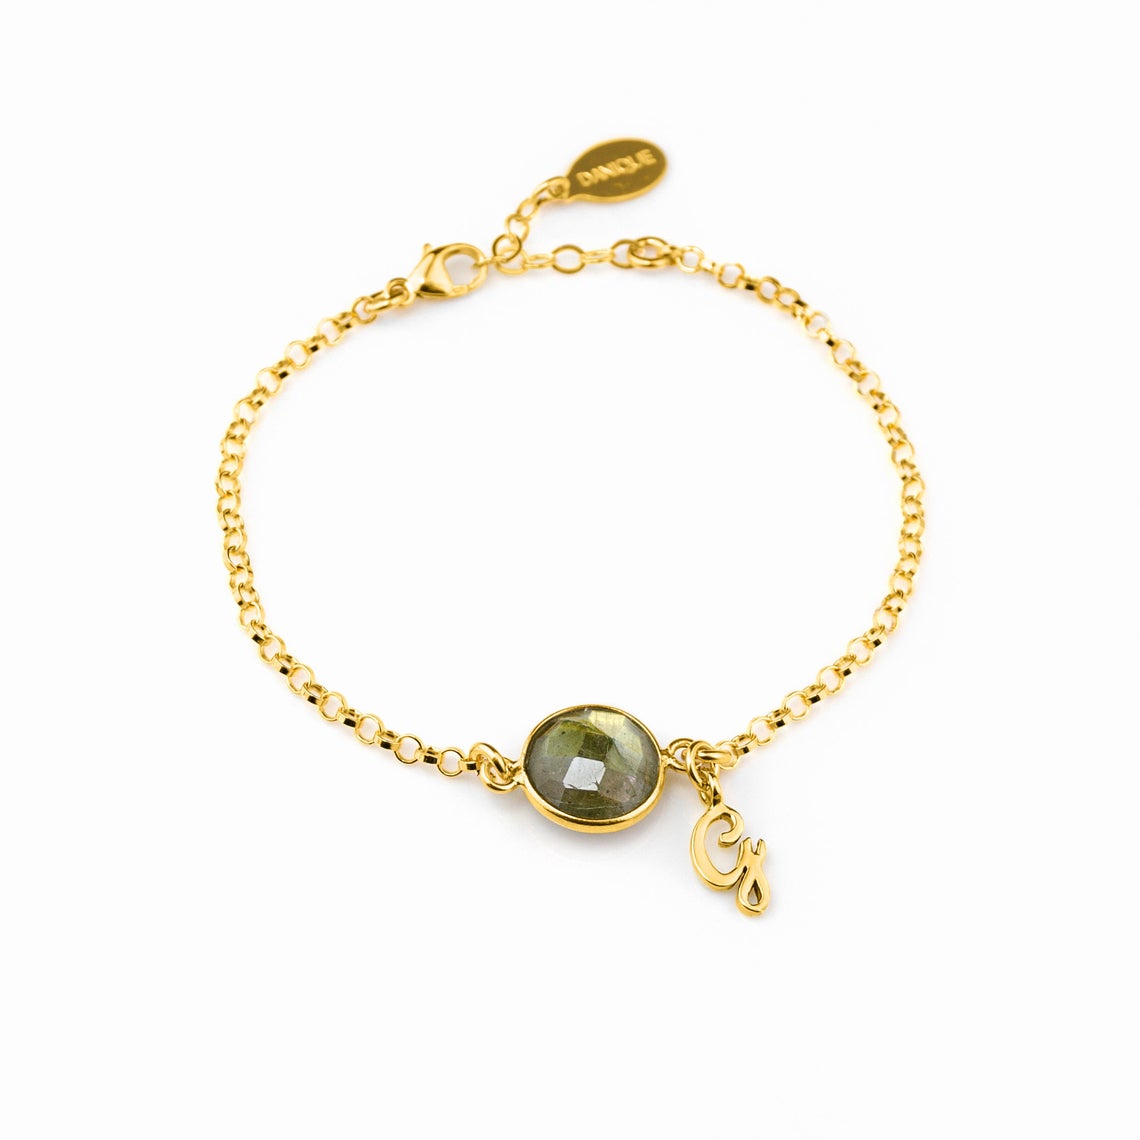 Heart Bracelet for Mom with Birthstone - Adjustable Gold Bracelet by Talisa